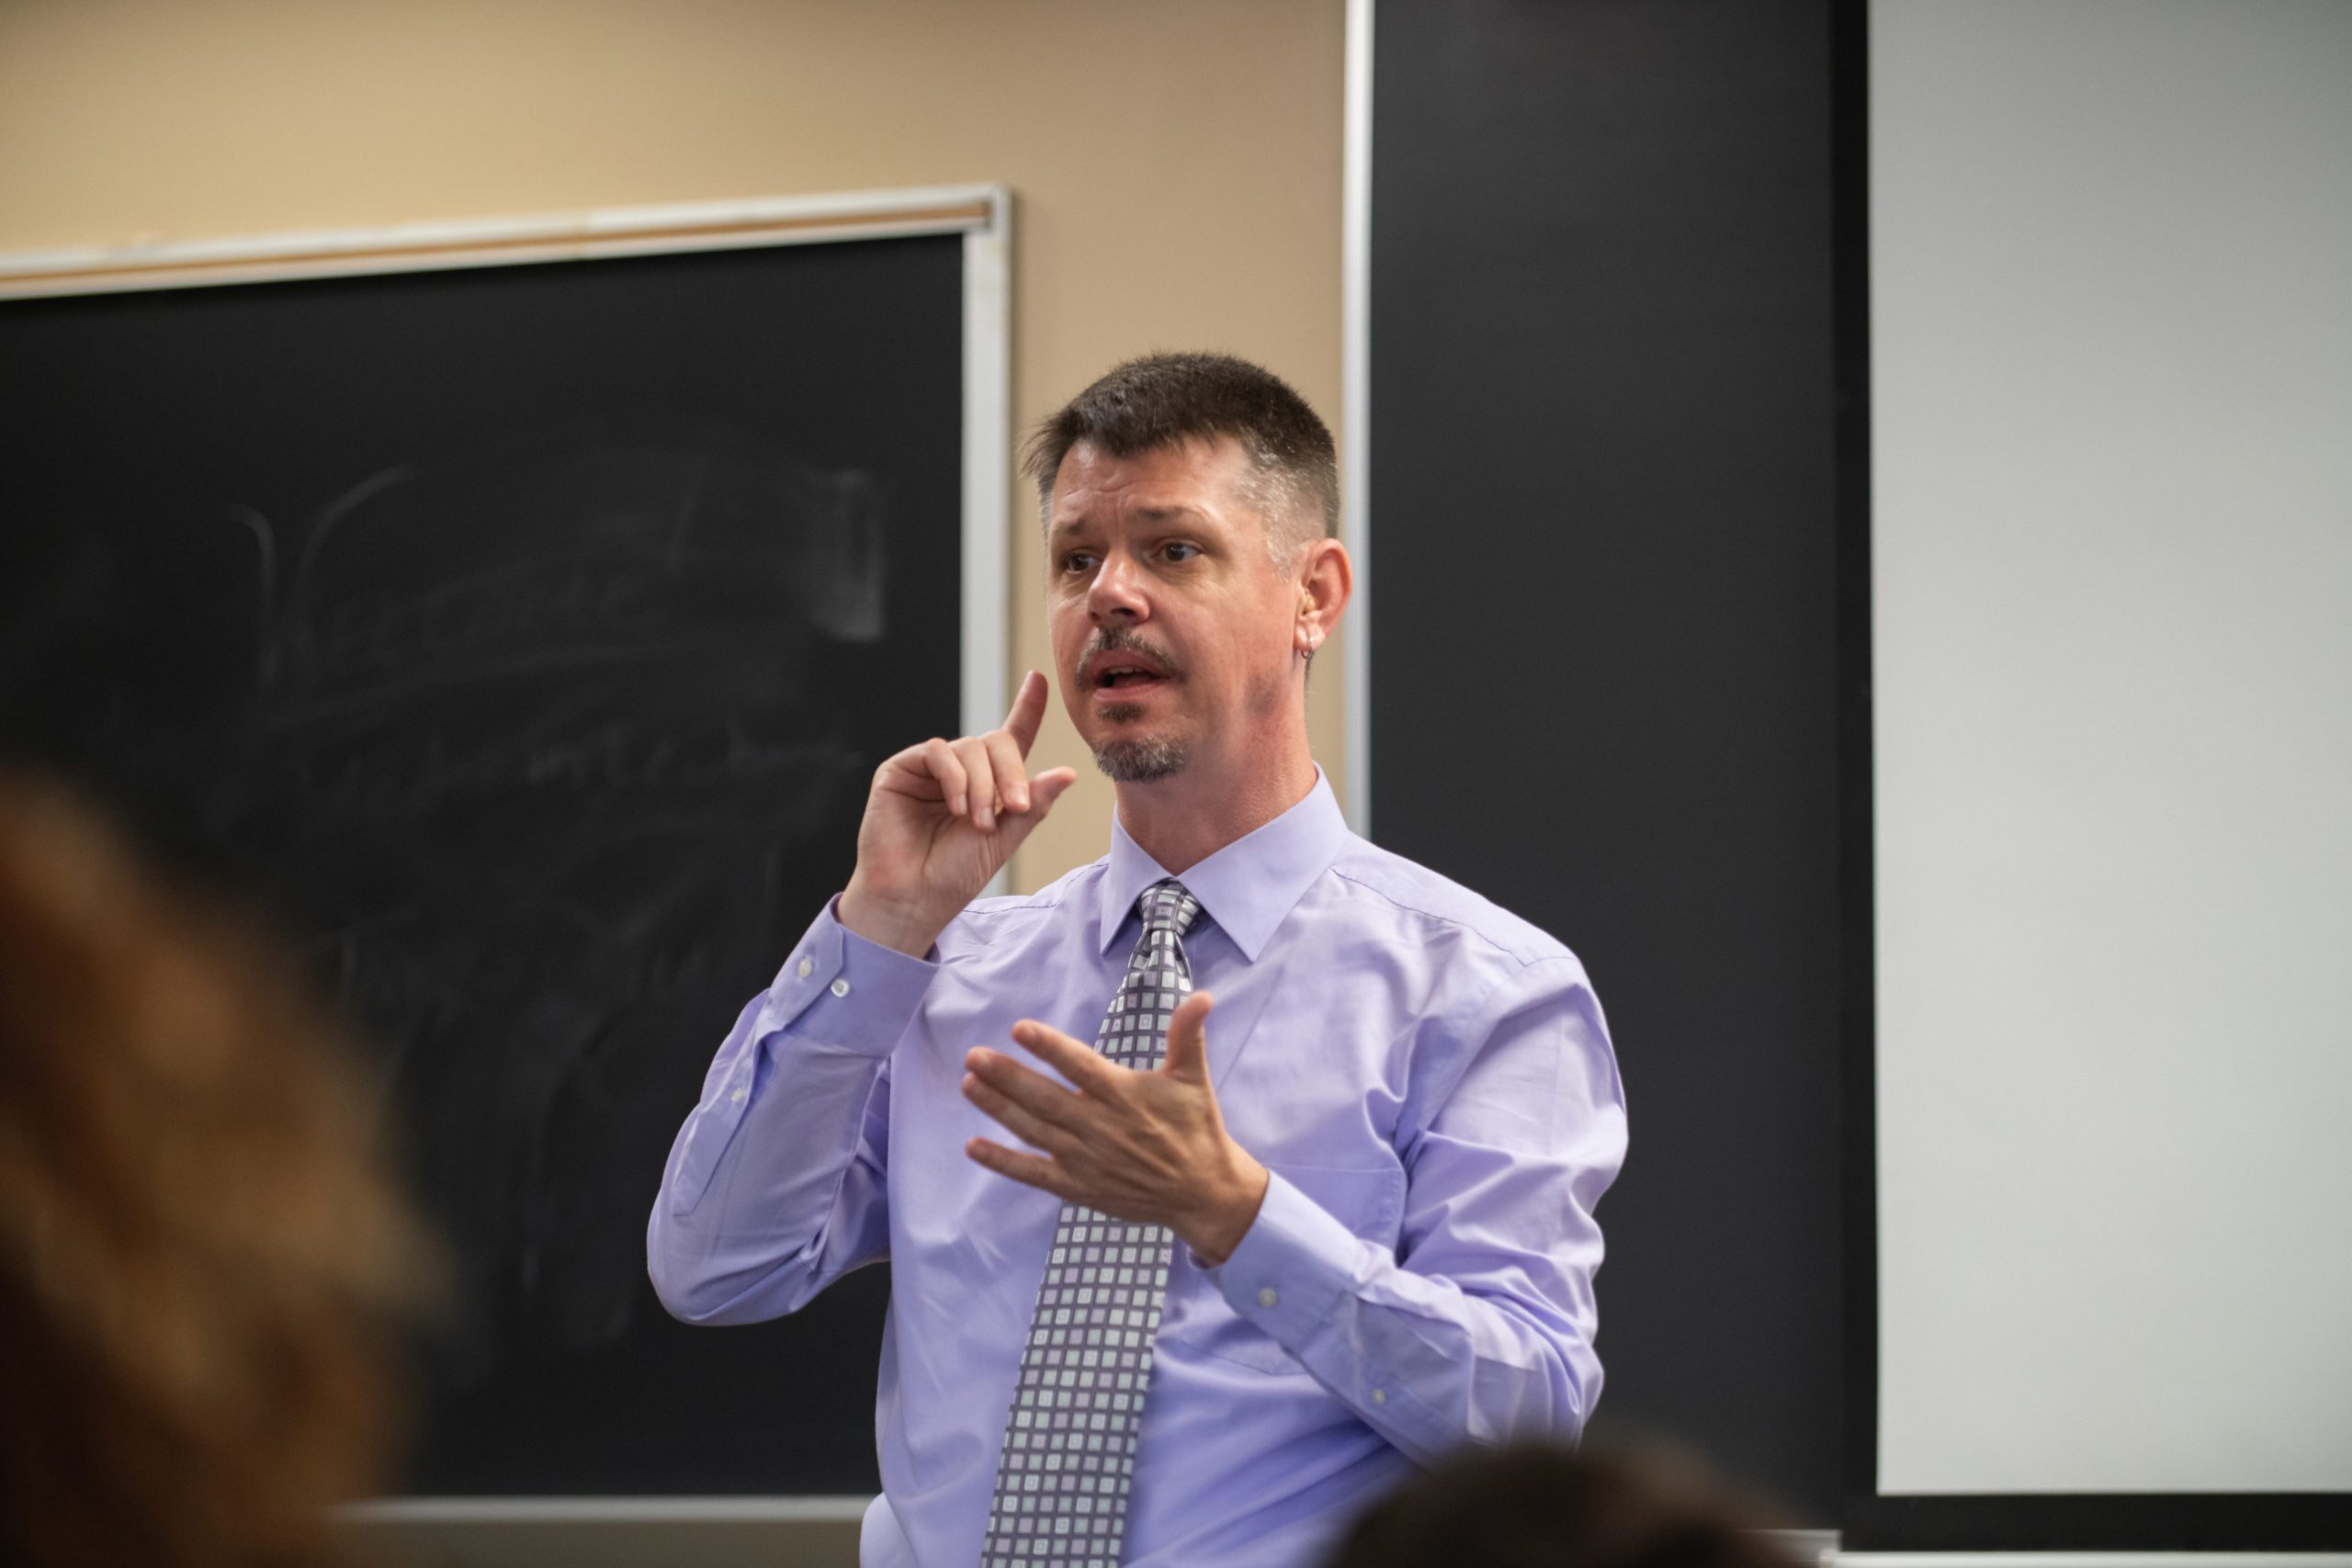 Professor communicates using American Sign Language in a classroom